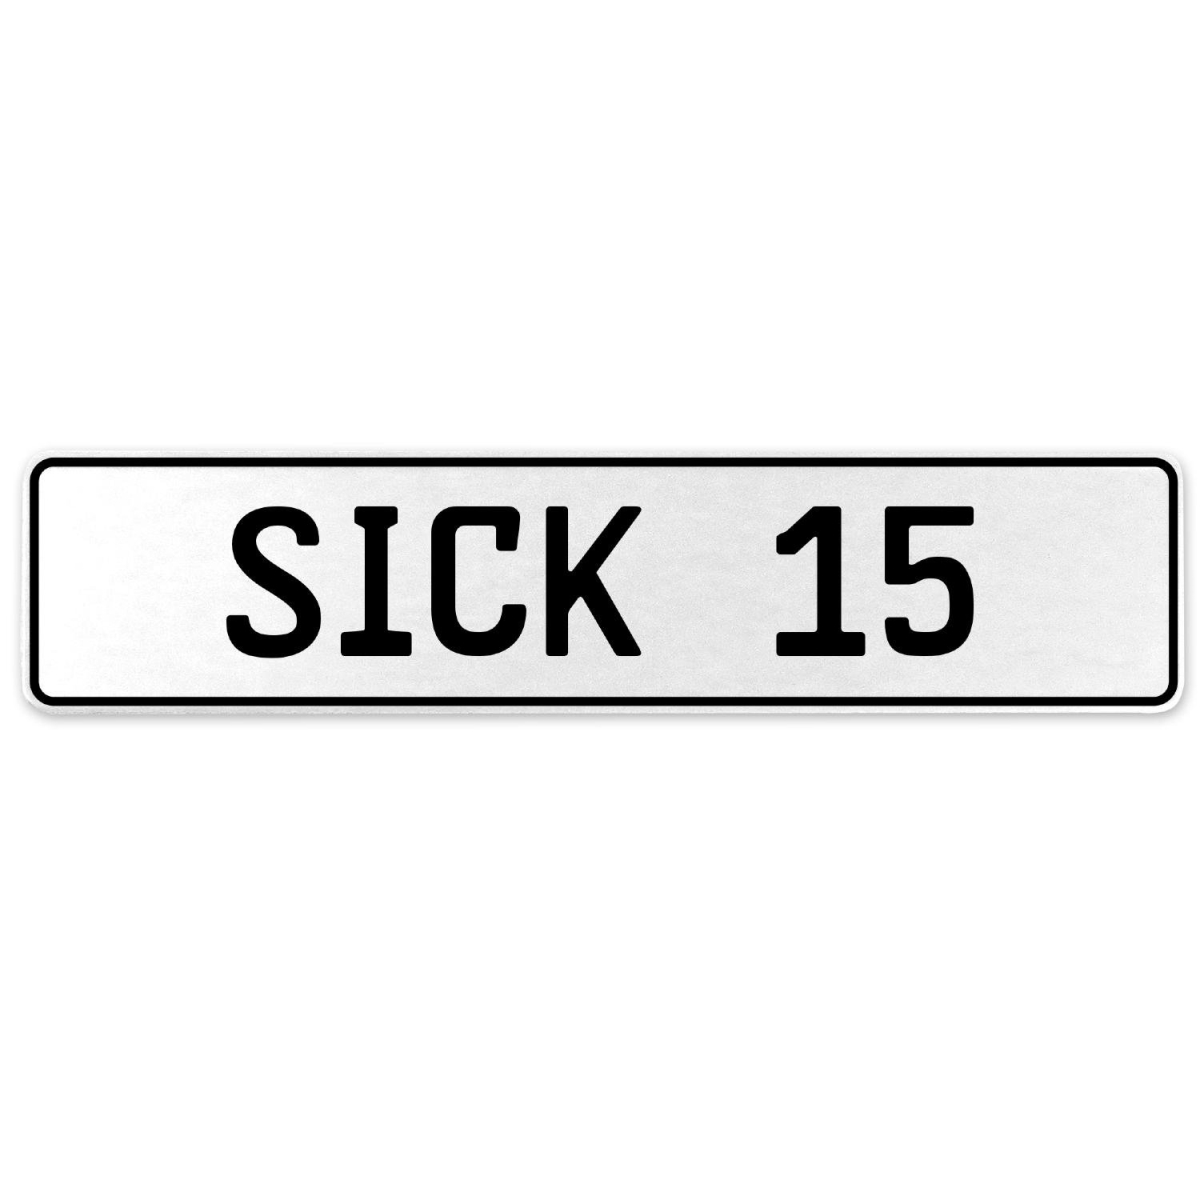 554315 Sick 15 - White Aluminum Street Sign Mancave Euro Plate Name Door Sign Wall